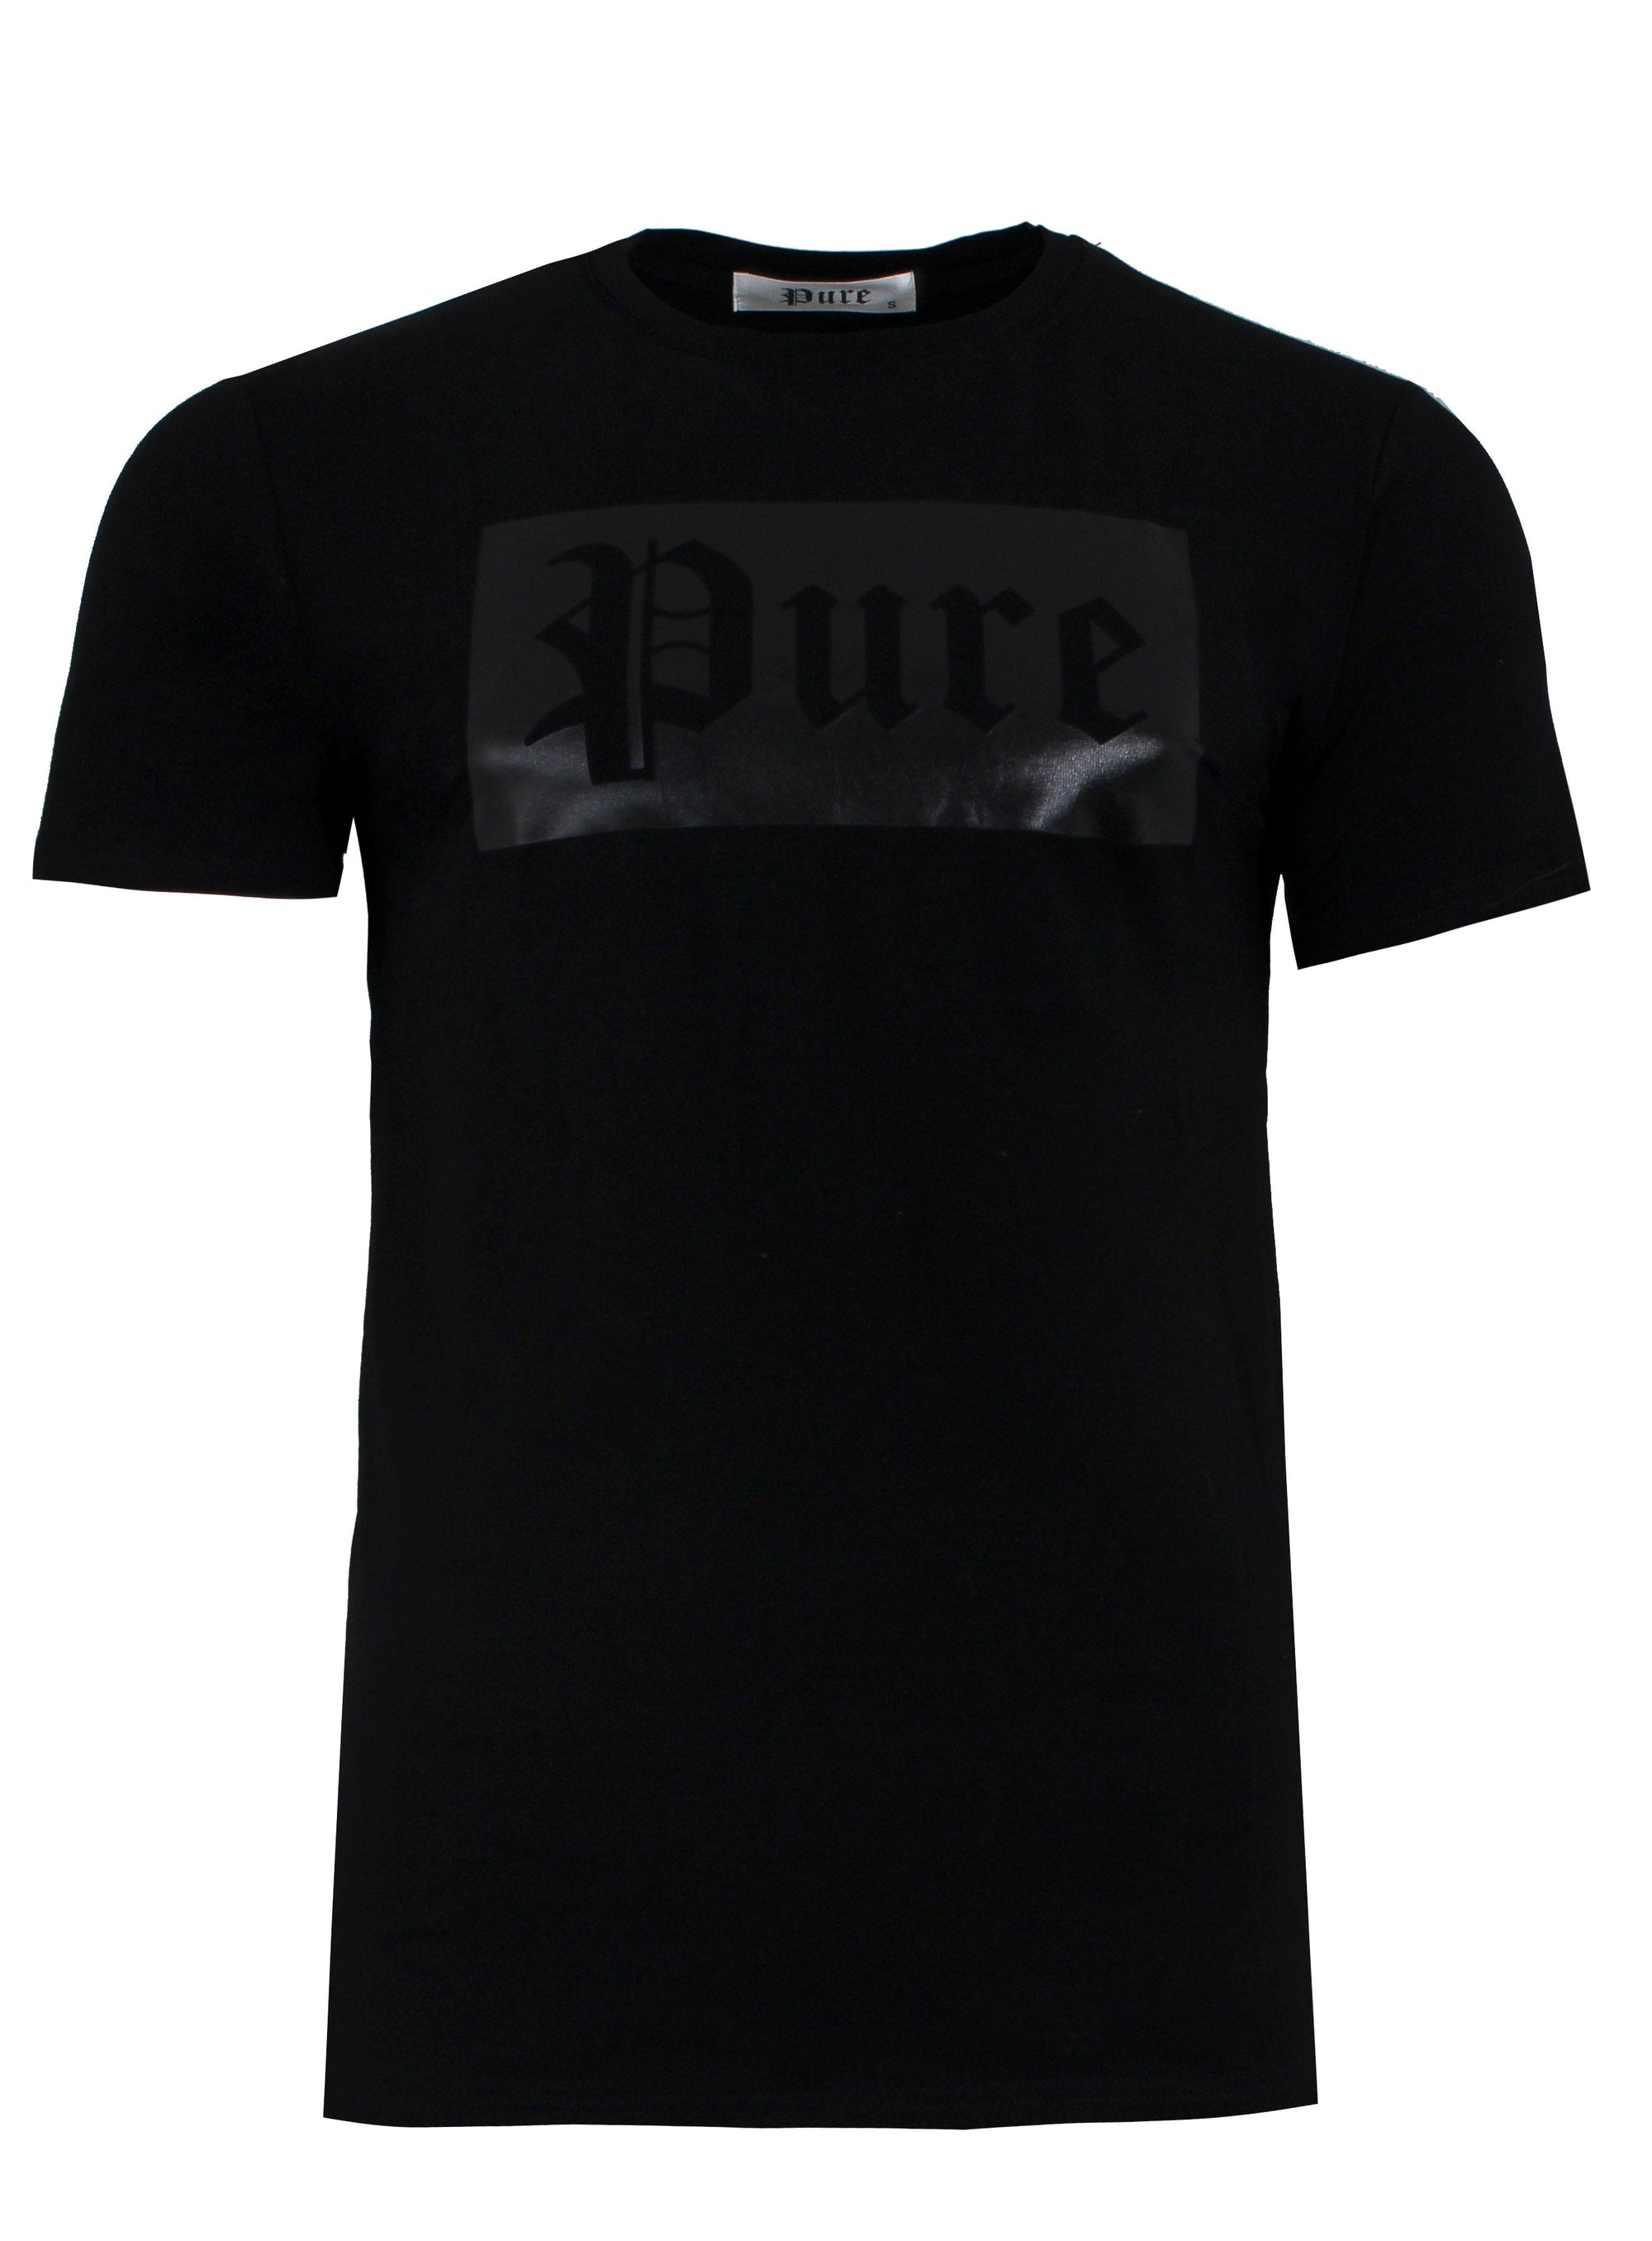 Black on Black Logo Tee Shirt